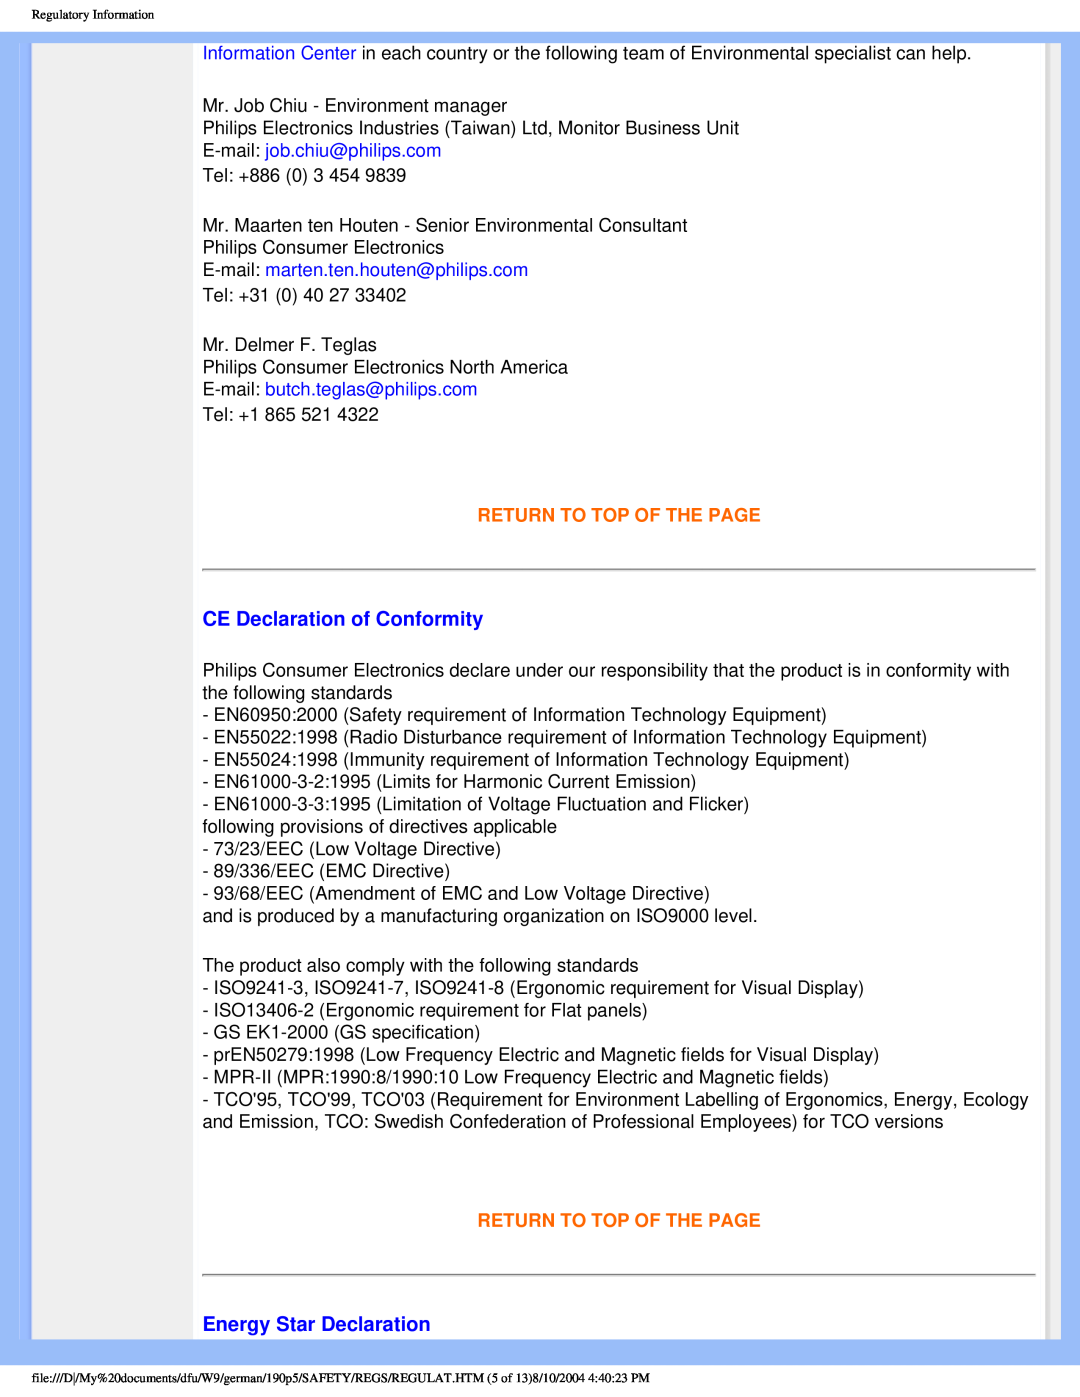 Philips 190P5 user manual CE Declaration of Conformity, Energy Star Declaration, E-mail job.chiu@philips.com 